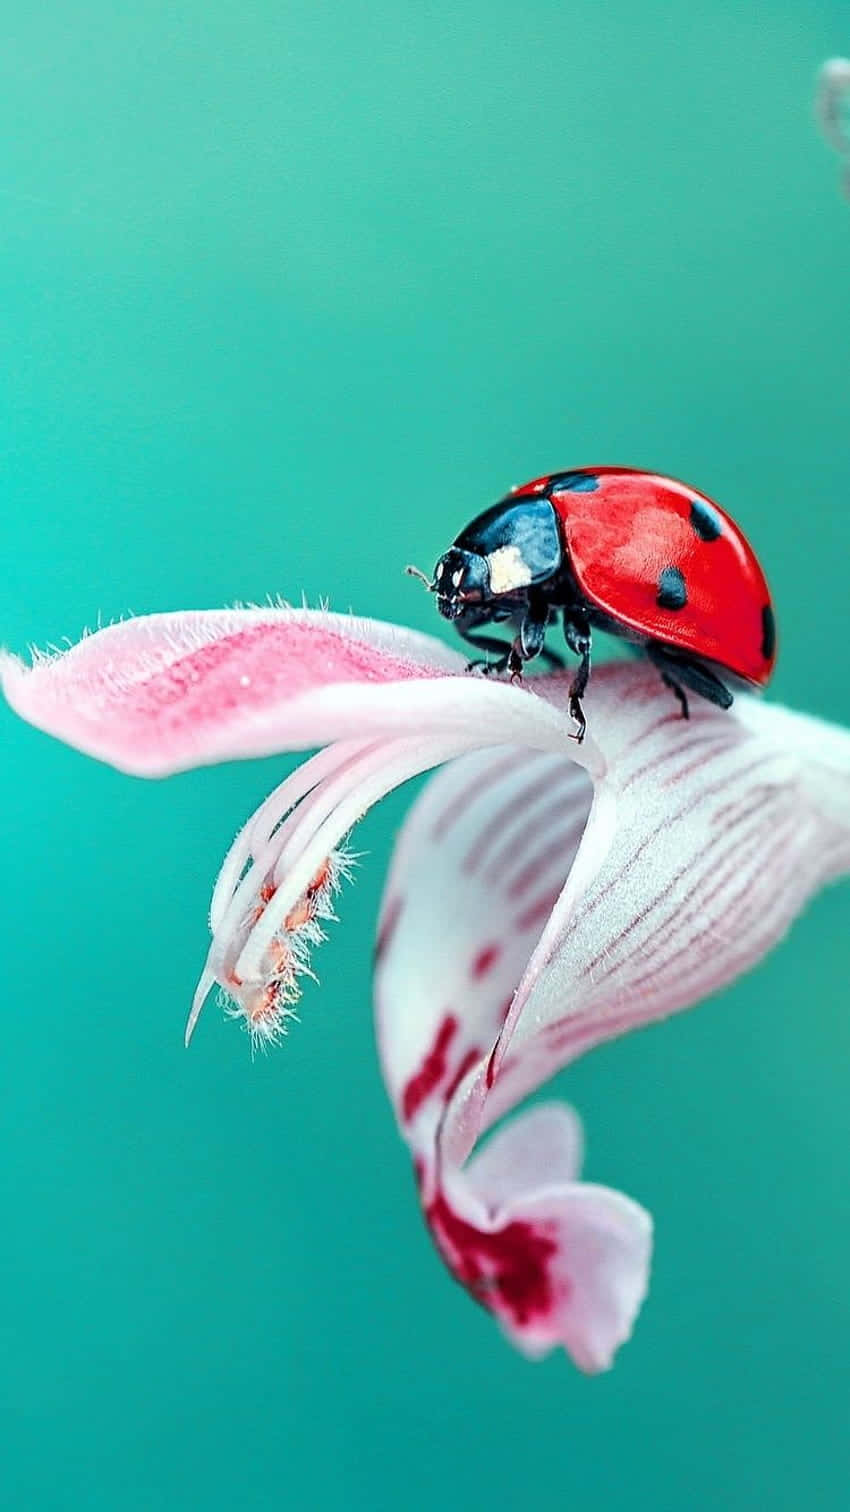 Ladybug Adorns the iPhone Wallpaper